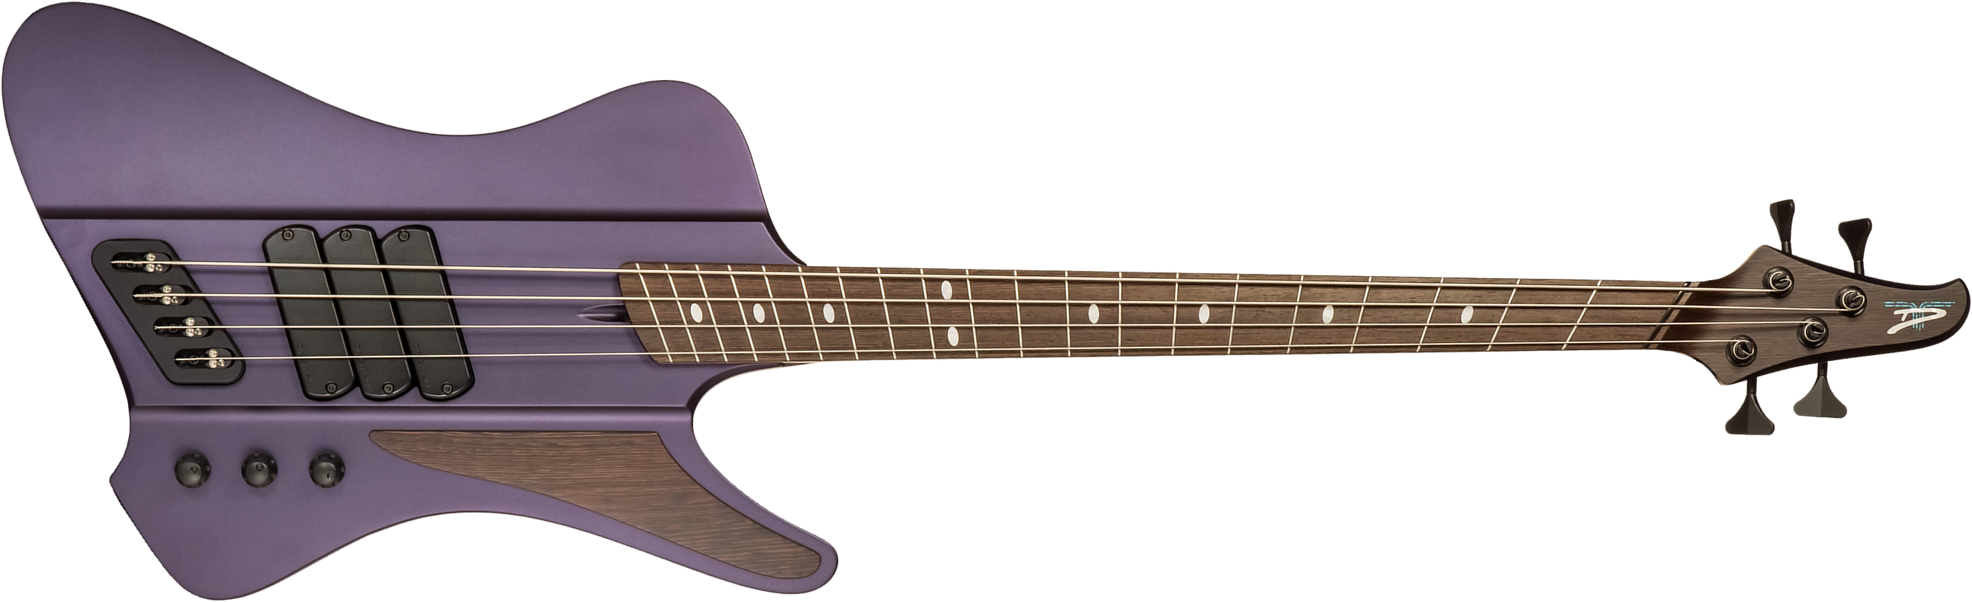 Dingwall Custom Shop D-roc 4c 3-pickups Wen #6982 - Purple To Faded Black - Solid body elektrische bas - Main picture